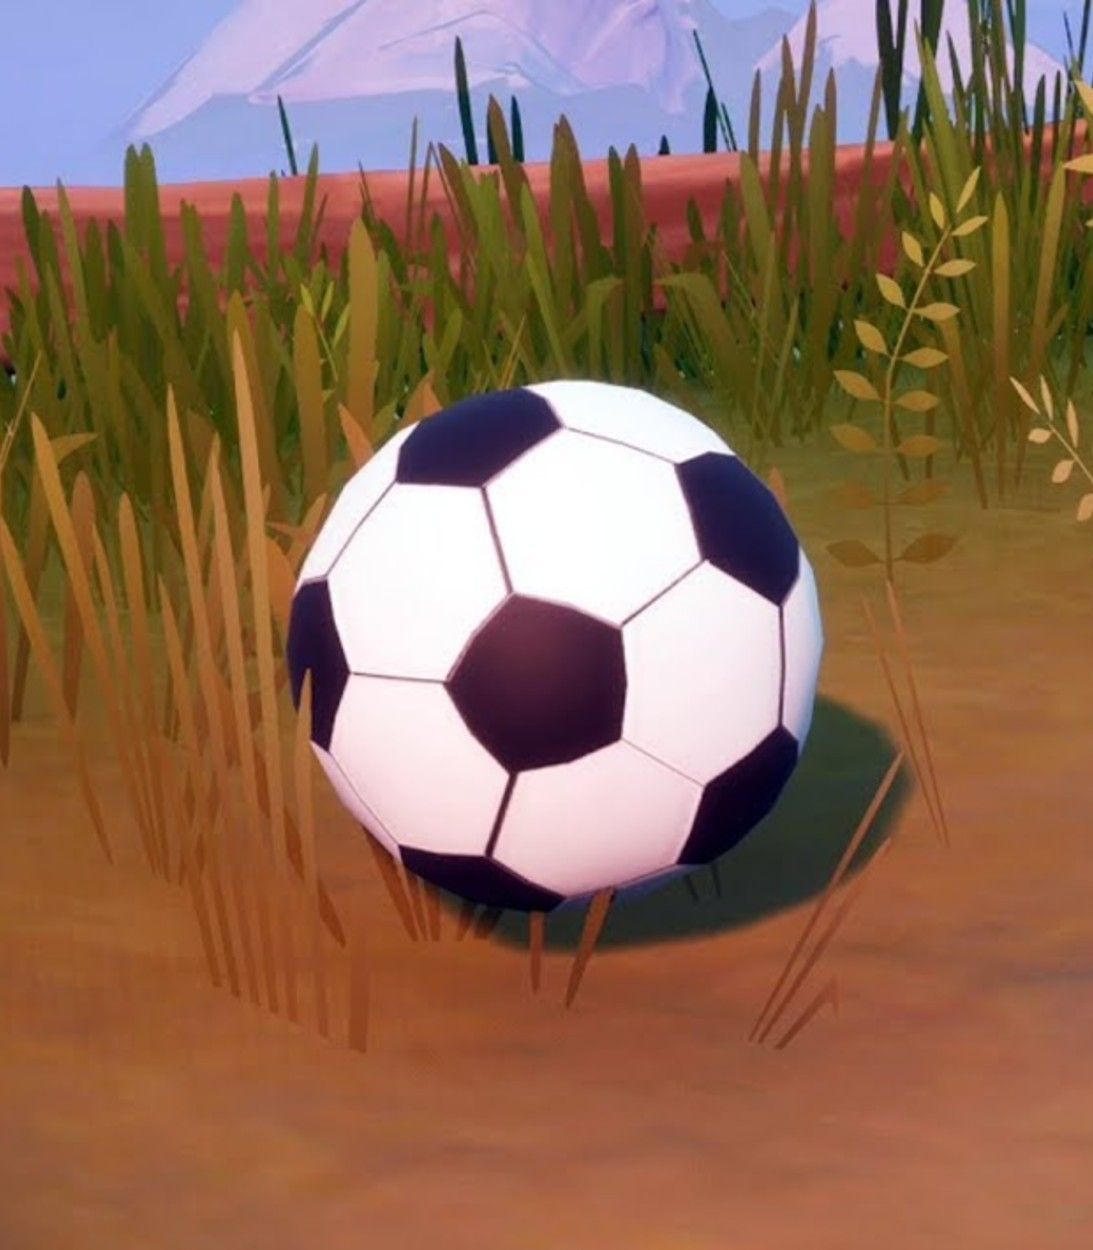 A soccer ball in Fortnite